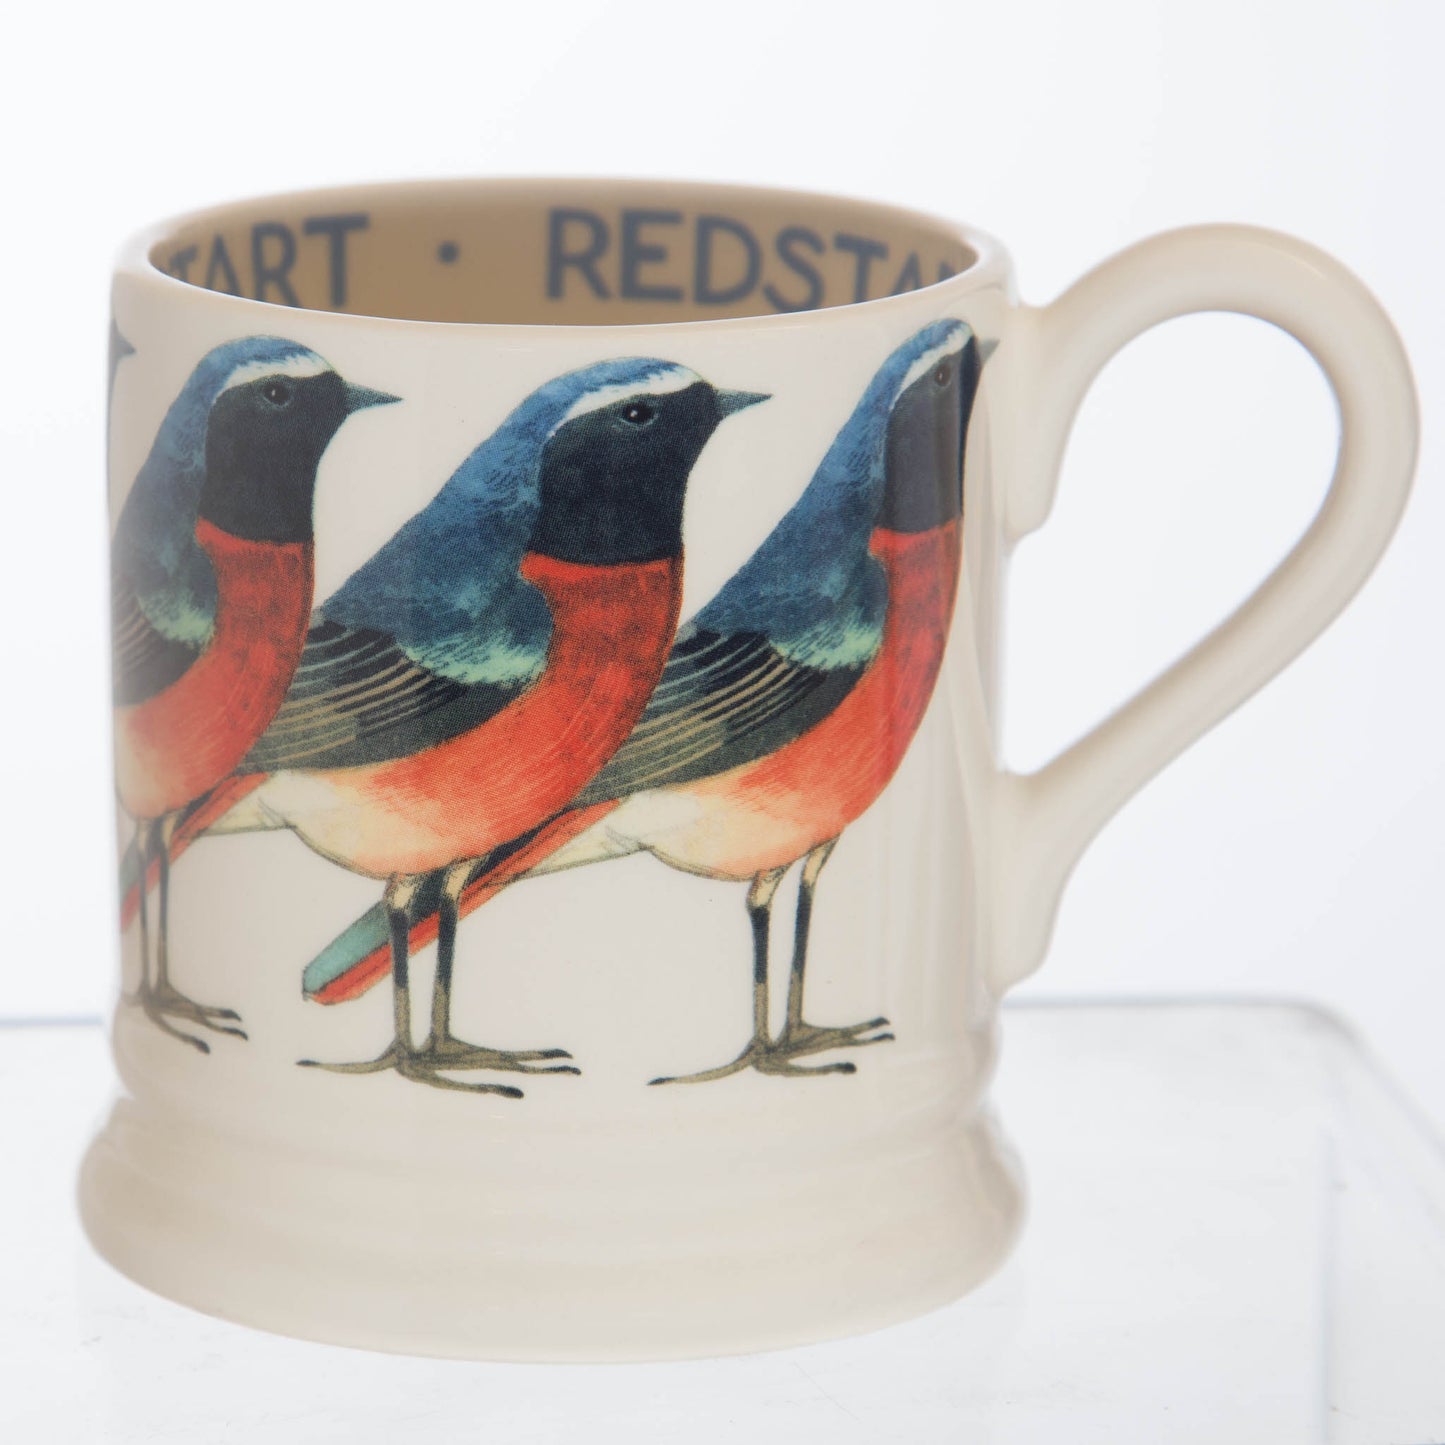 Redstart half pint mug from Emma Bridgewater